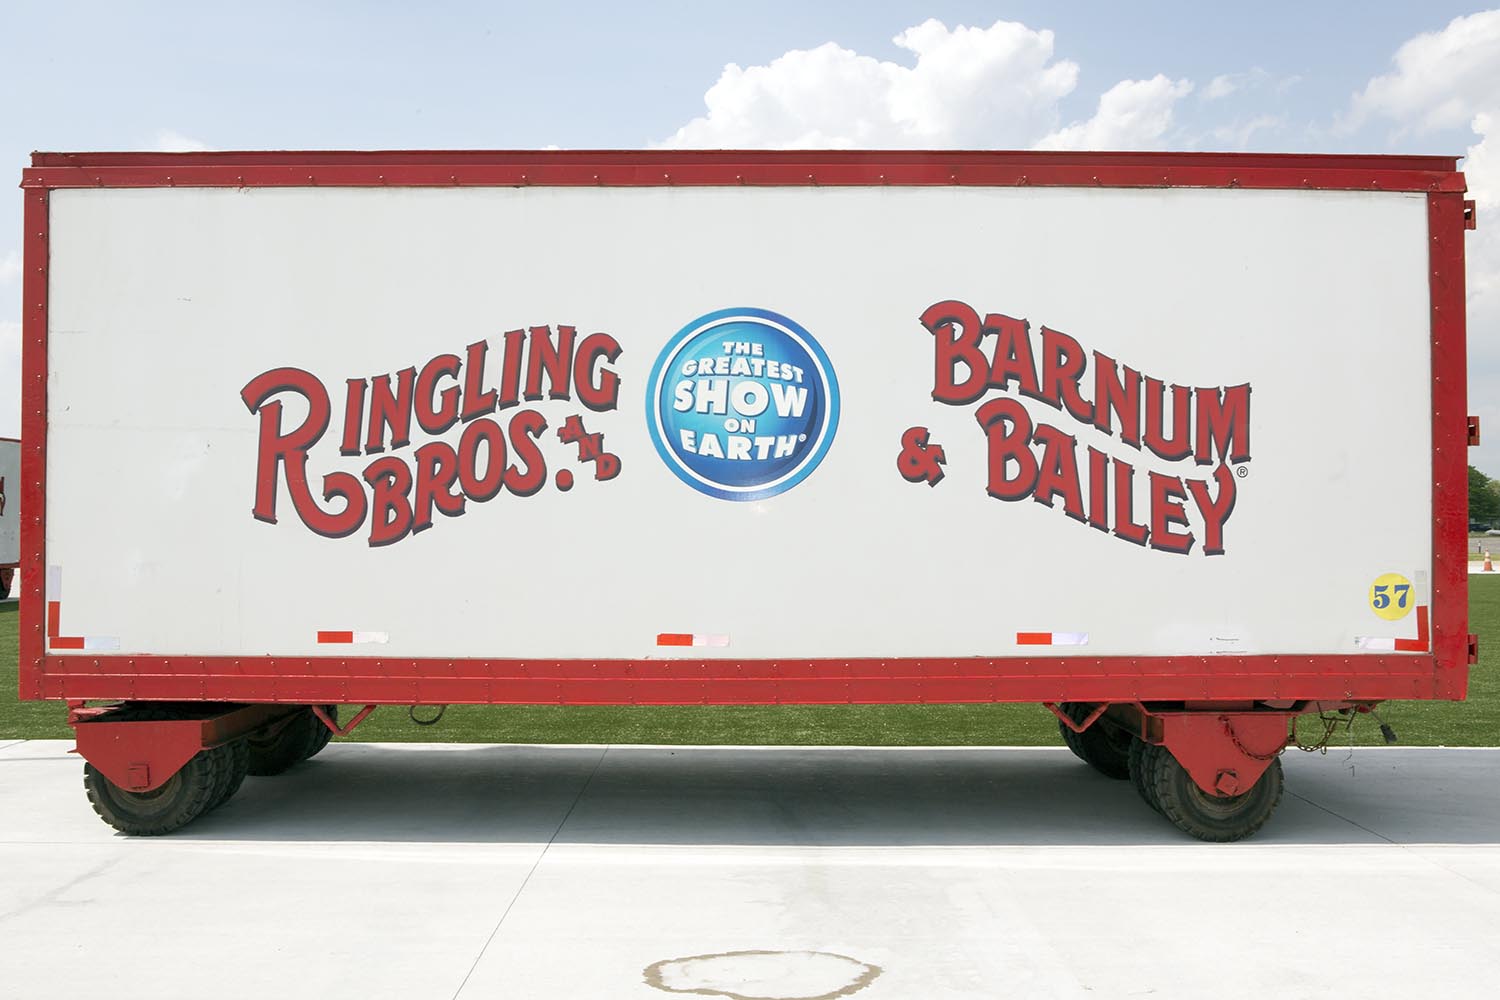 RinglingBros Barnum & Bailey Circus